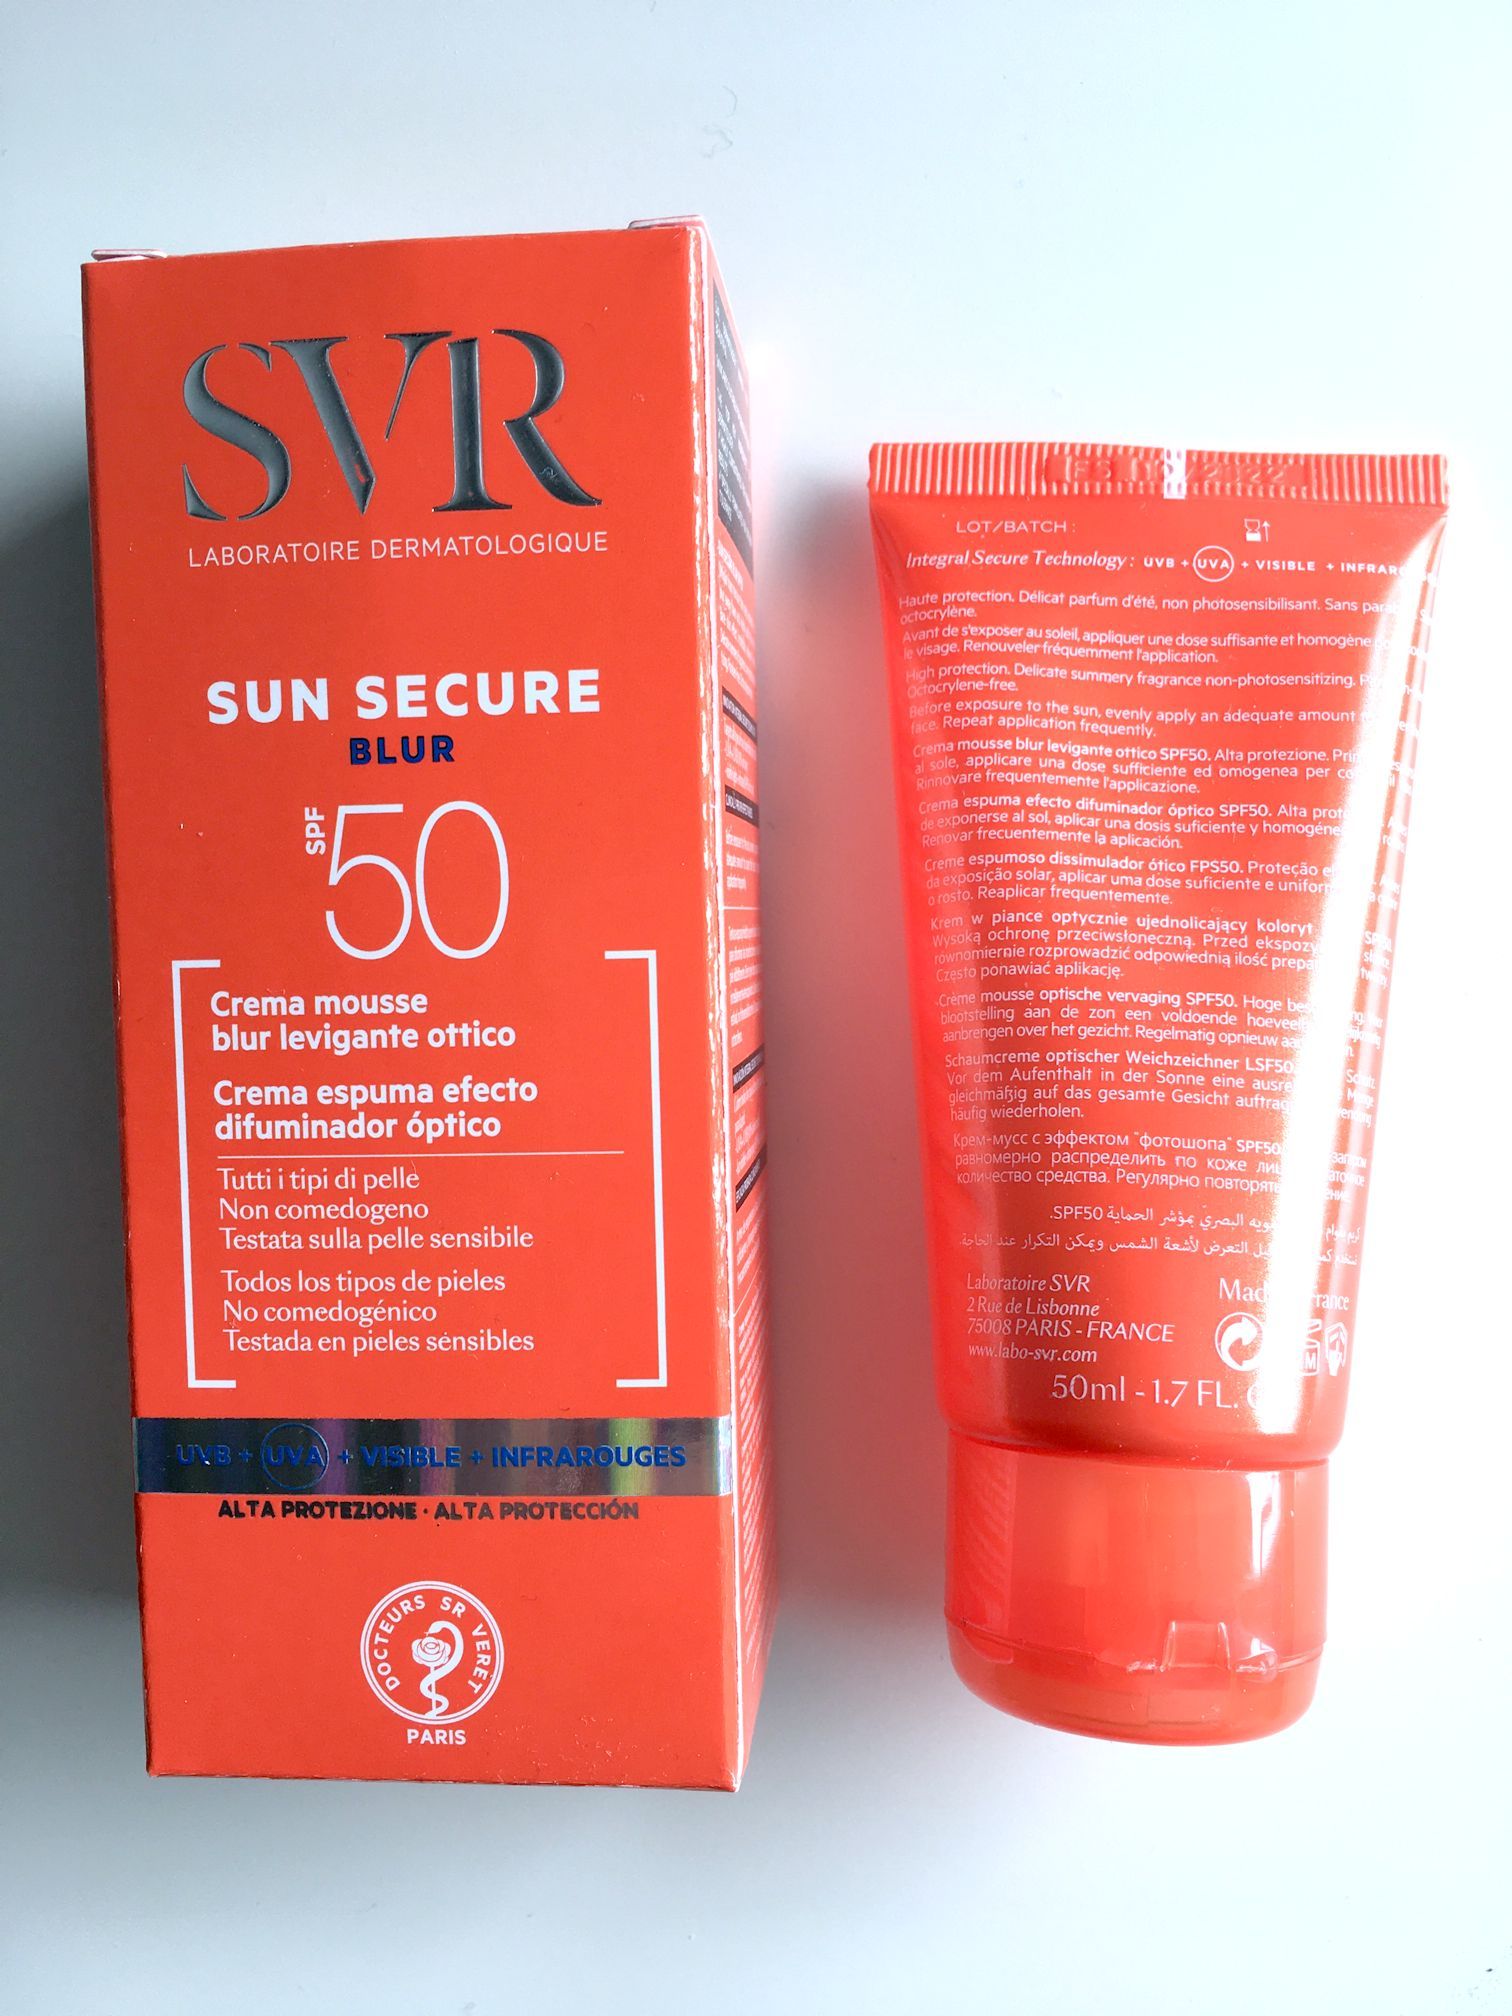 Skincare Notebook: SVR Sun Secure Blur SPF50 50 ml Review